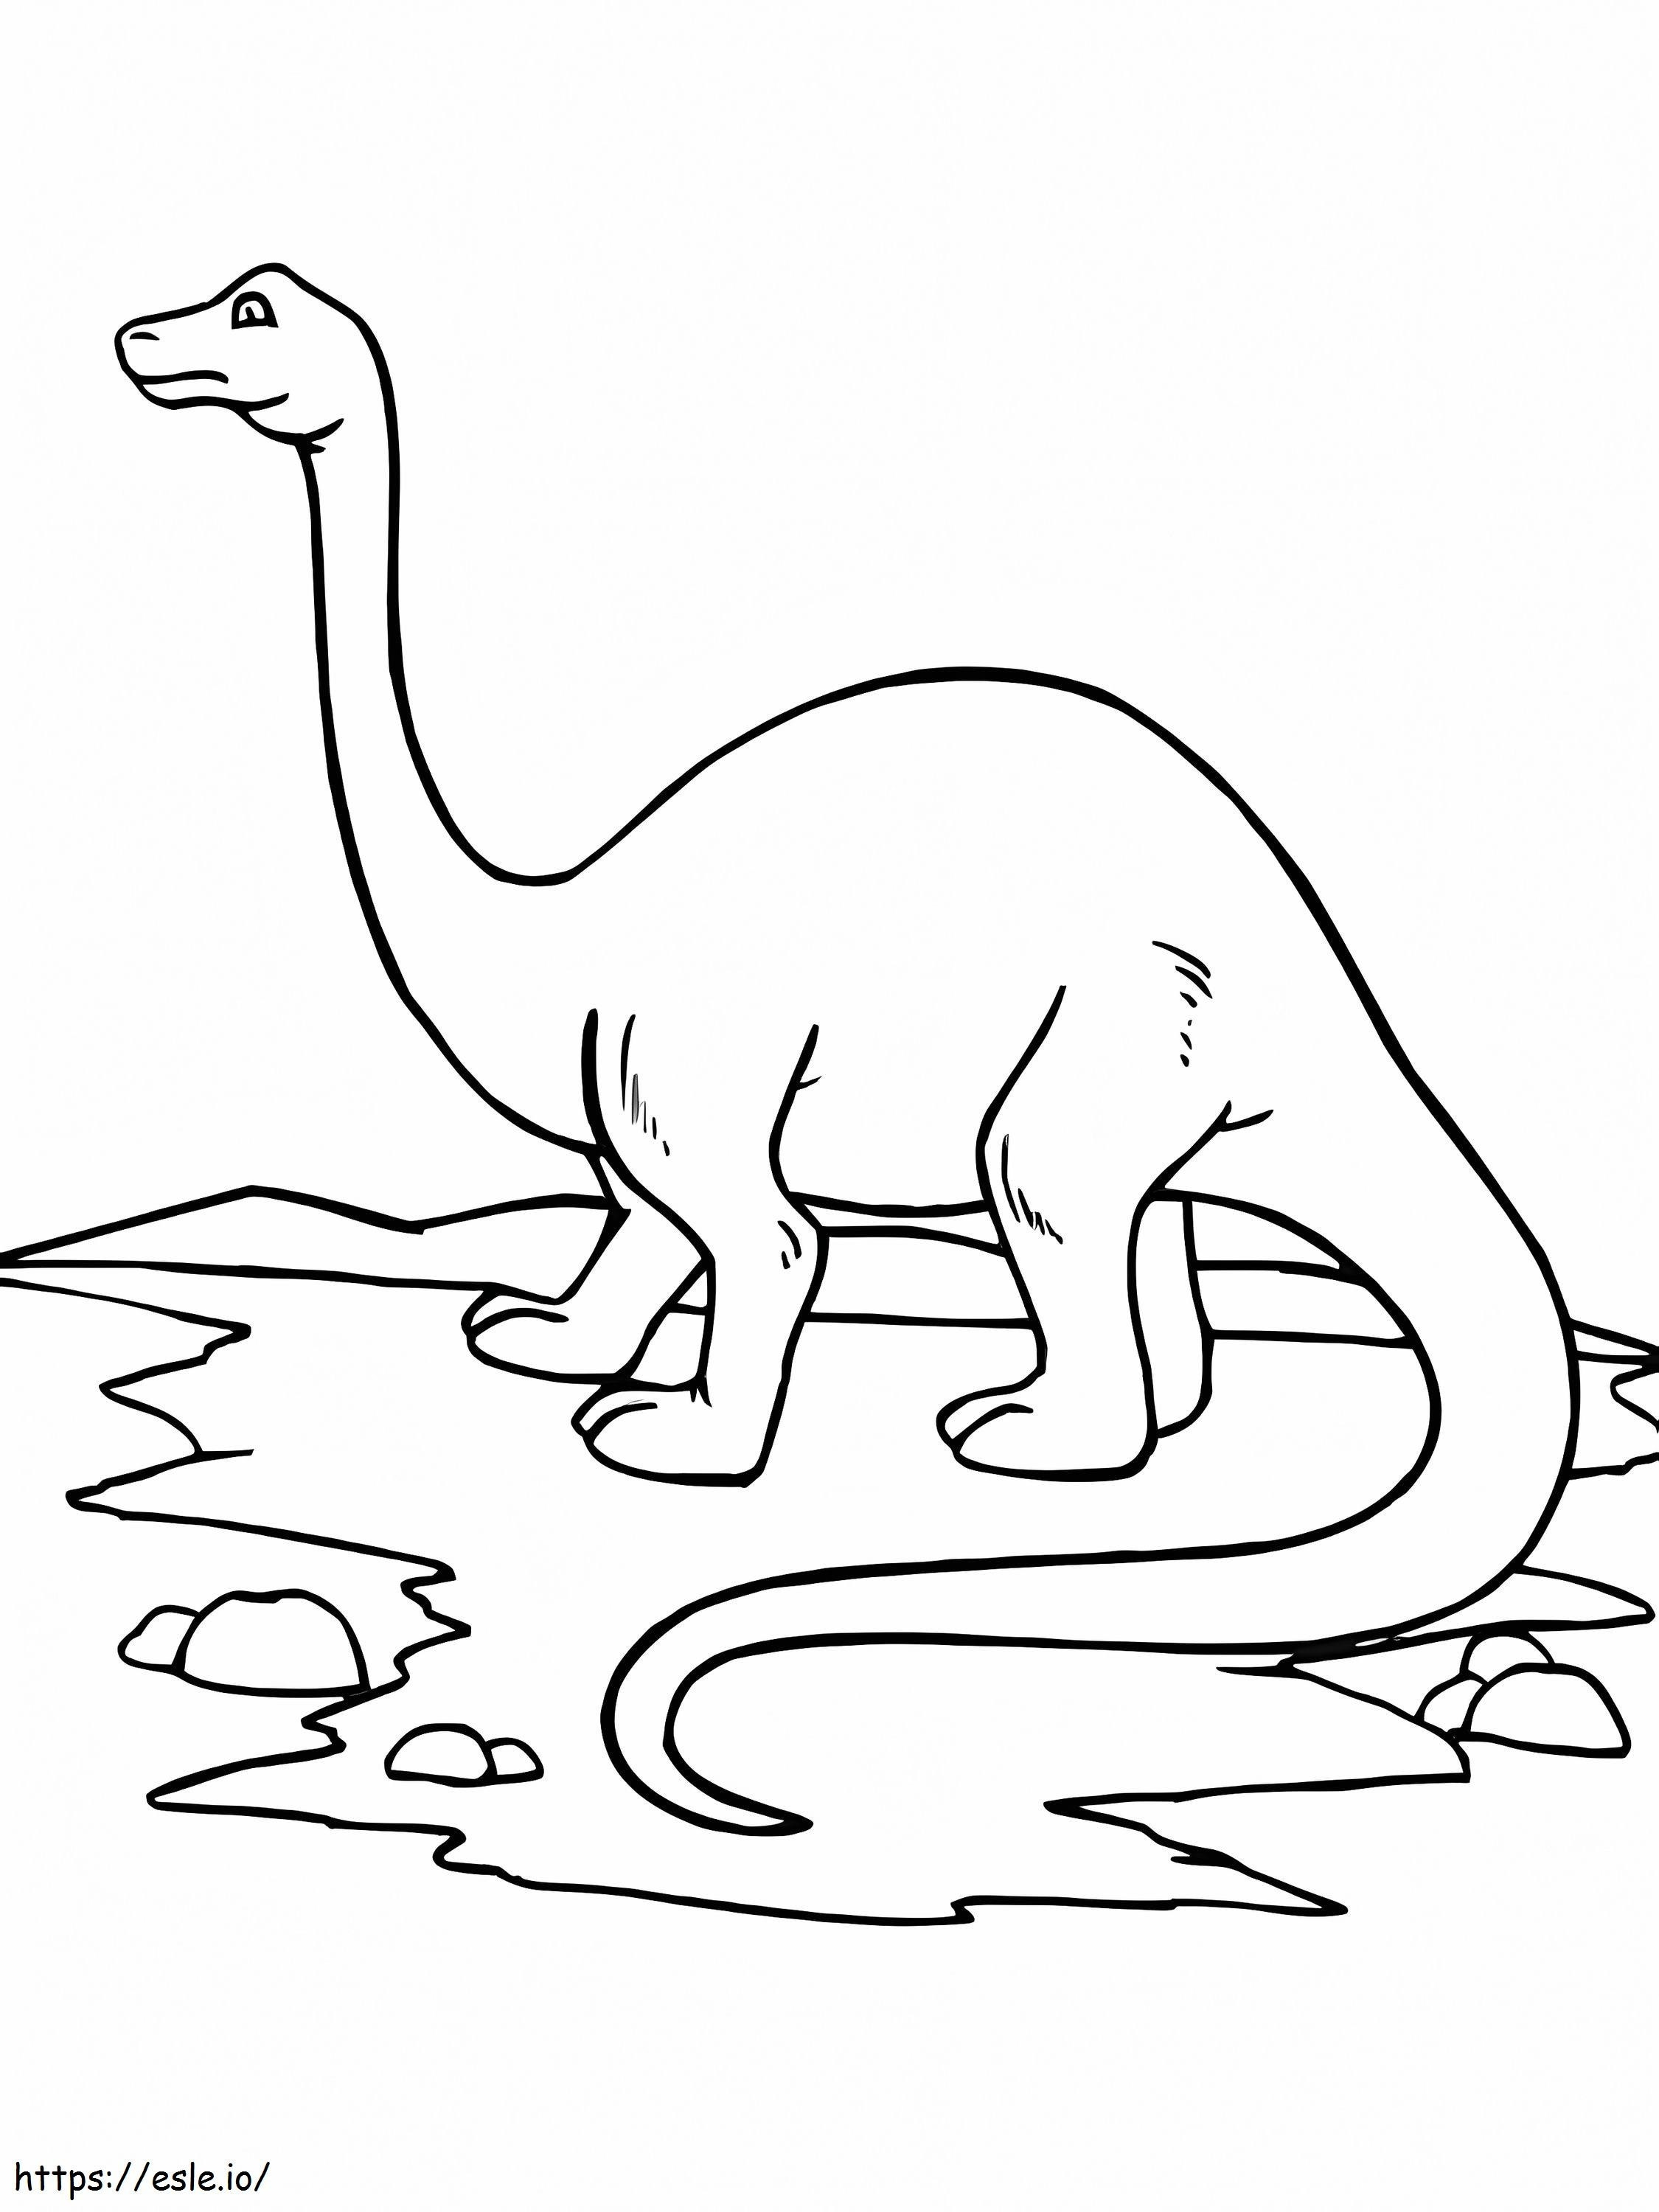 Brontosaurus 2 coloring page